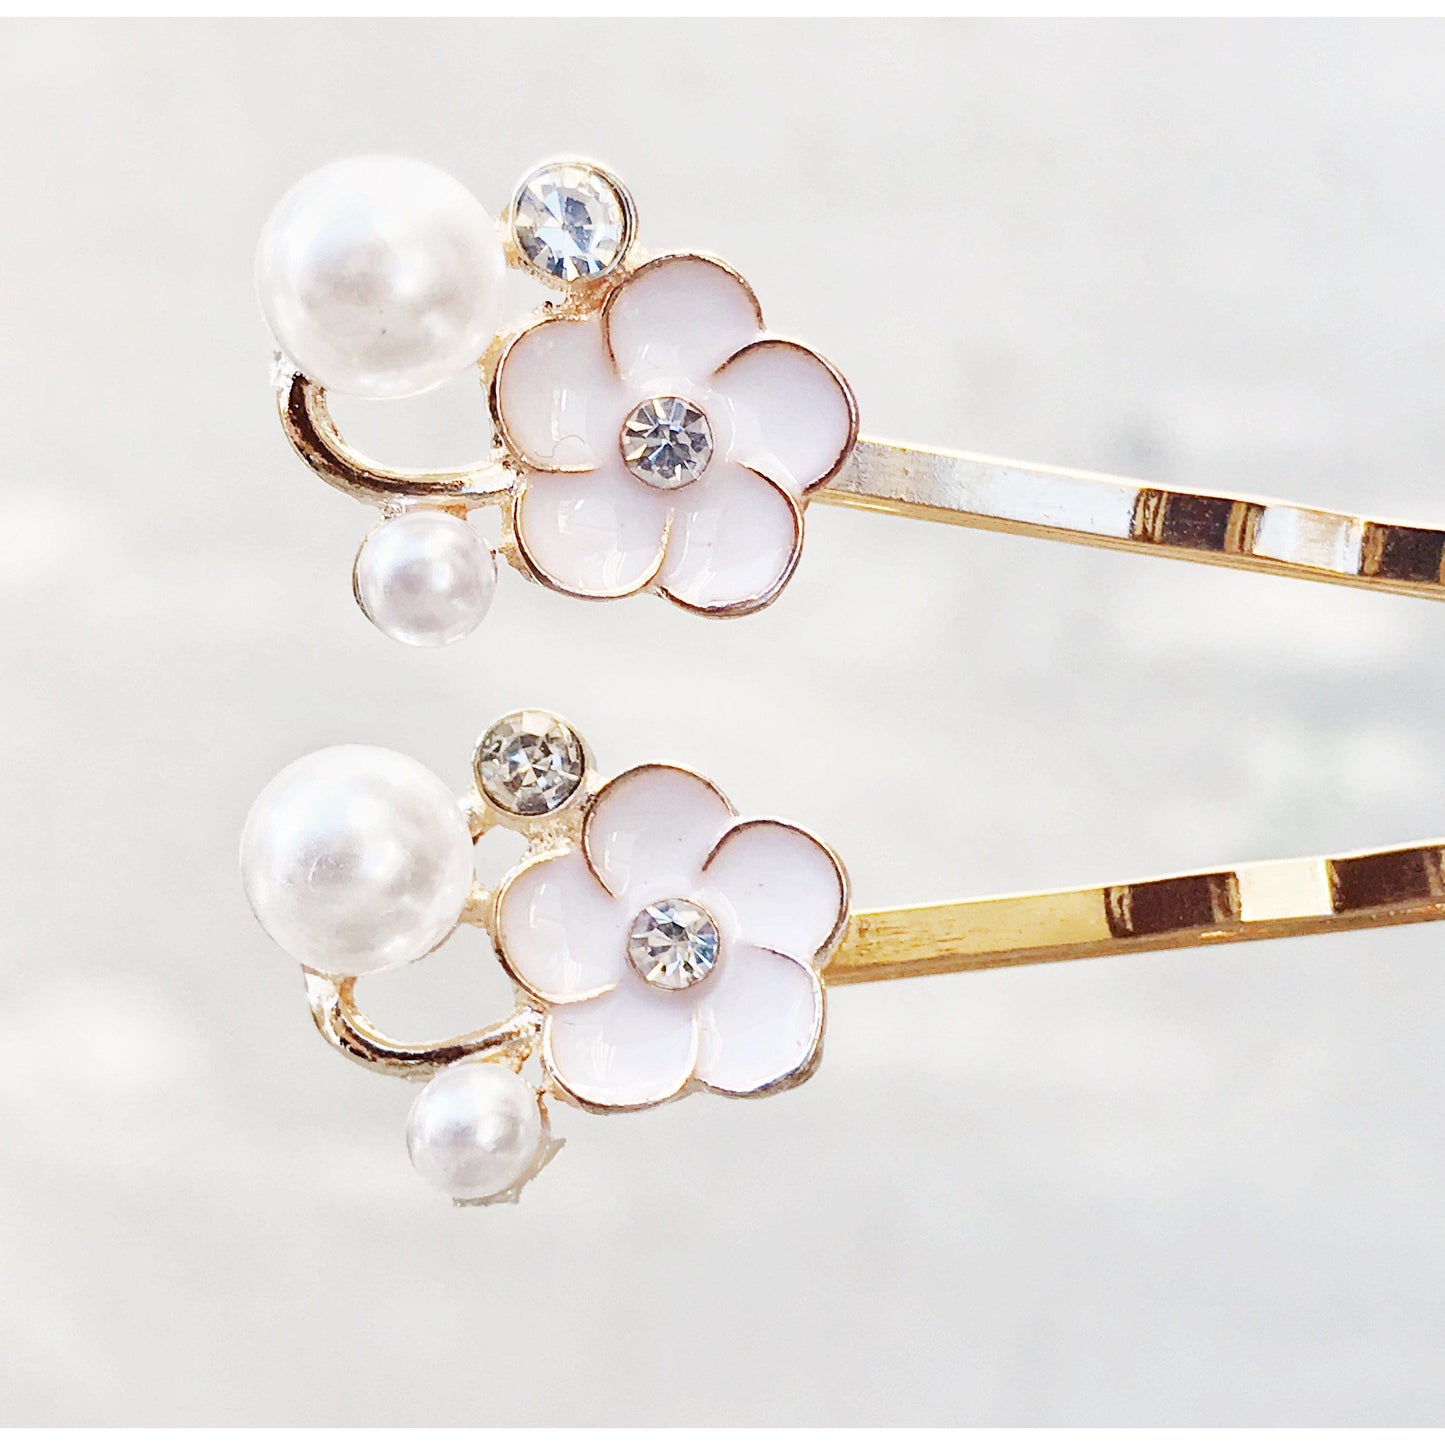 White Floral Pearl & Rhinestone Gold Hair Pins: Elegant Accents